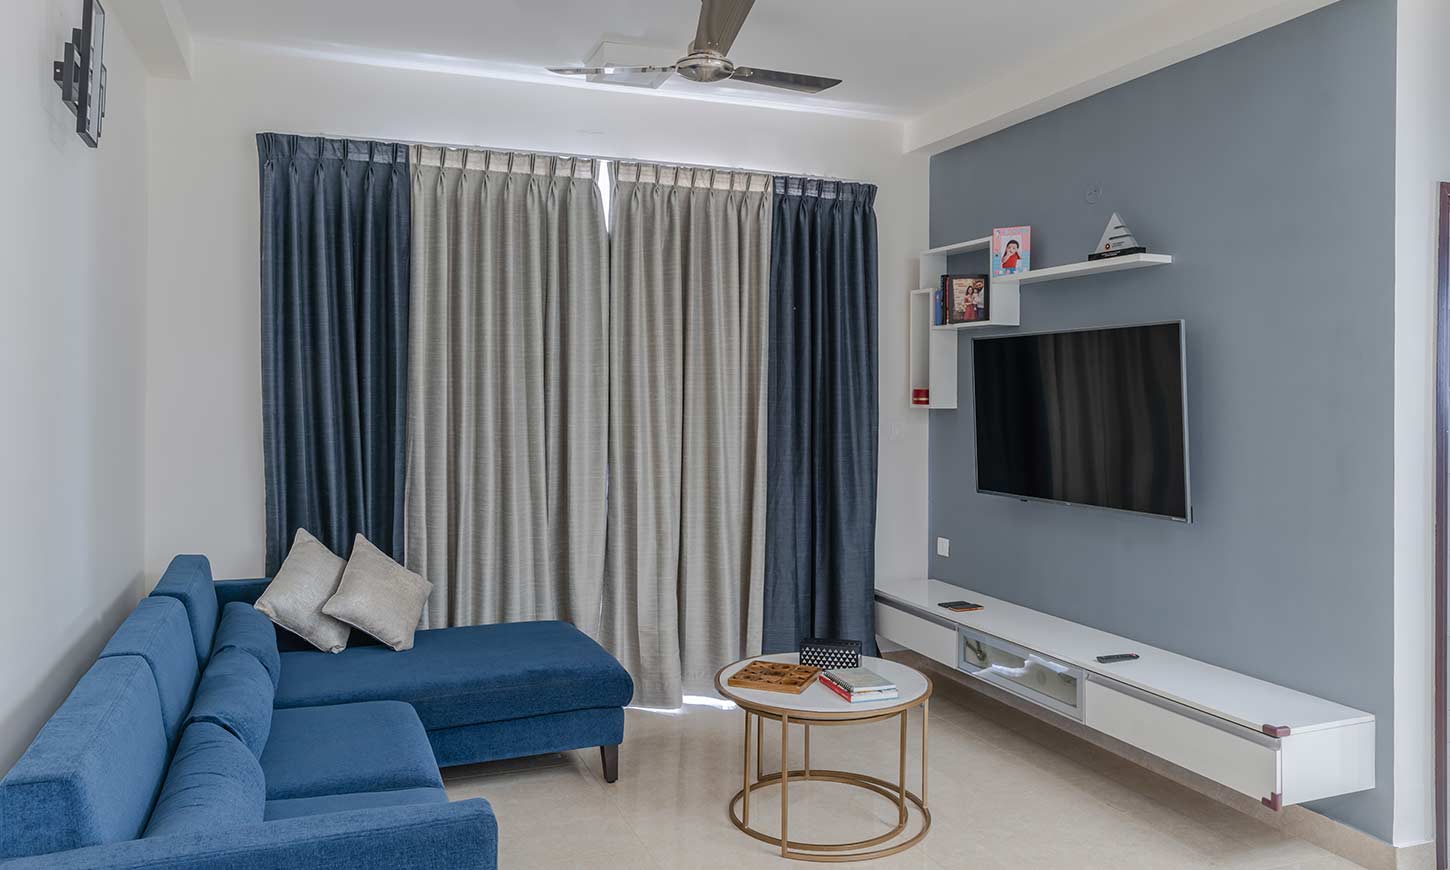 Living room interior design bangalore with a tv unit, sofa and curtains designed for prestige falcon city interior